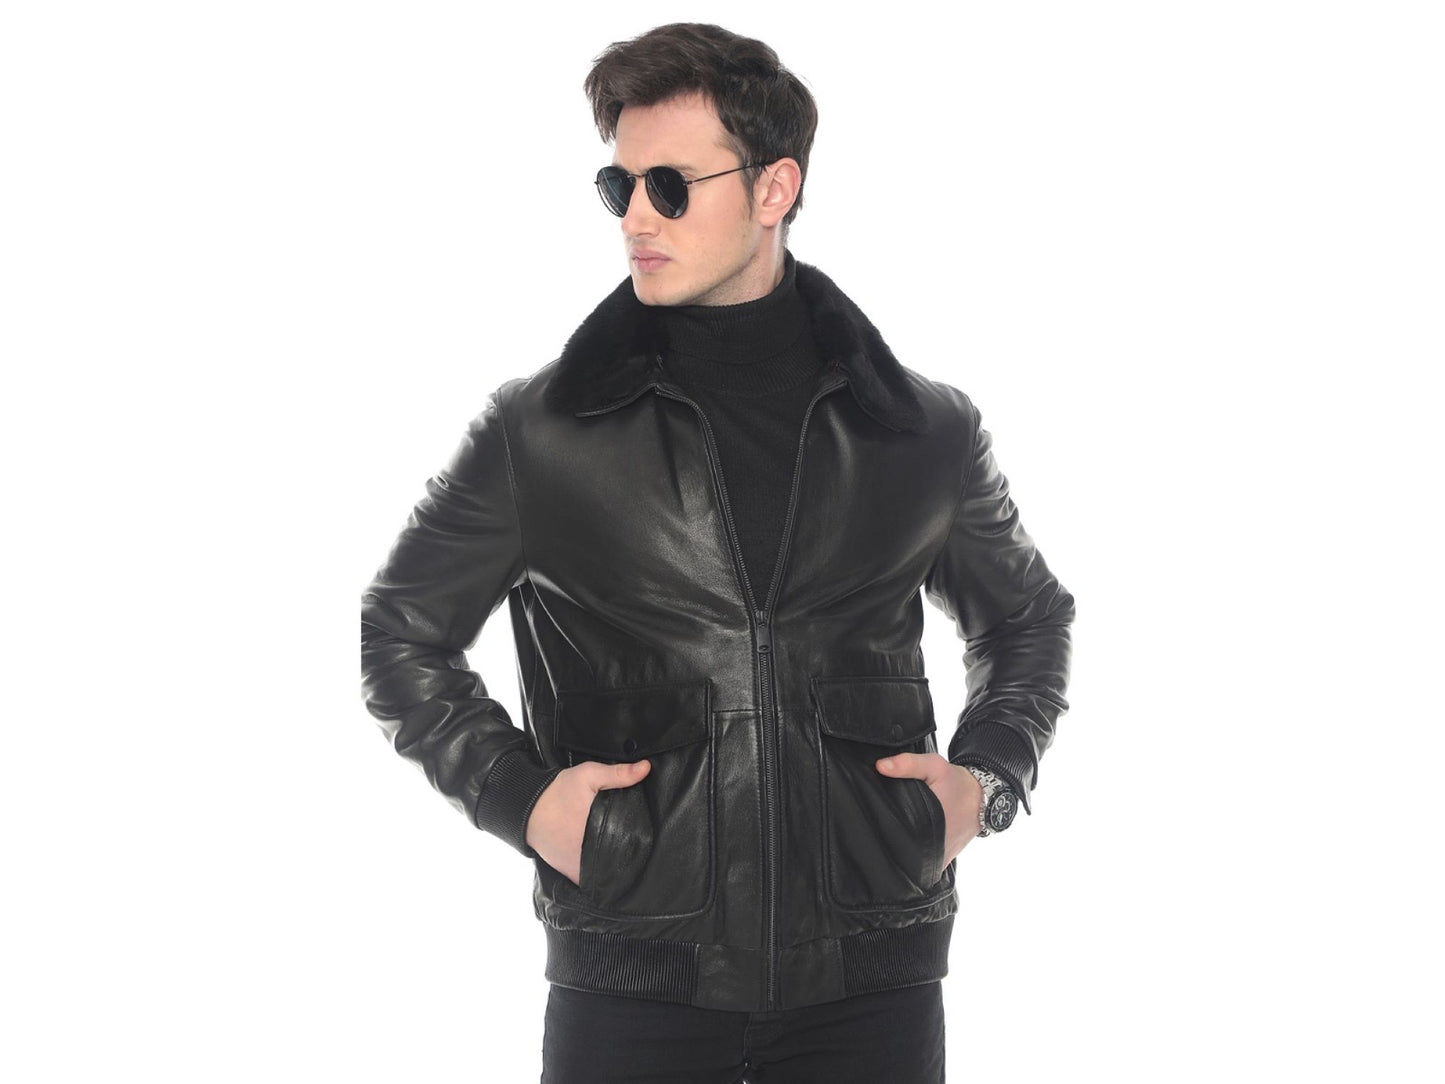 Urban Noir Leather Bomber with Fox Fur Collar